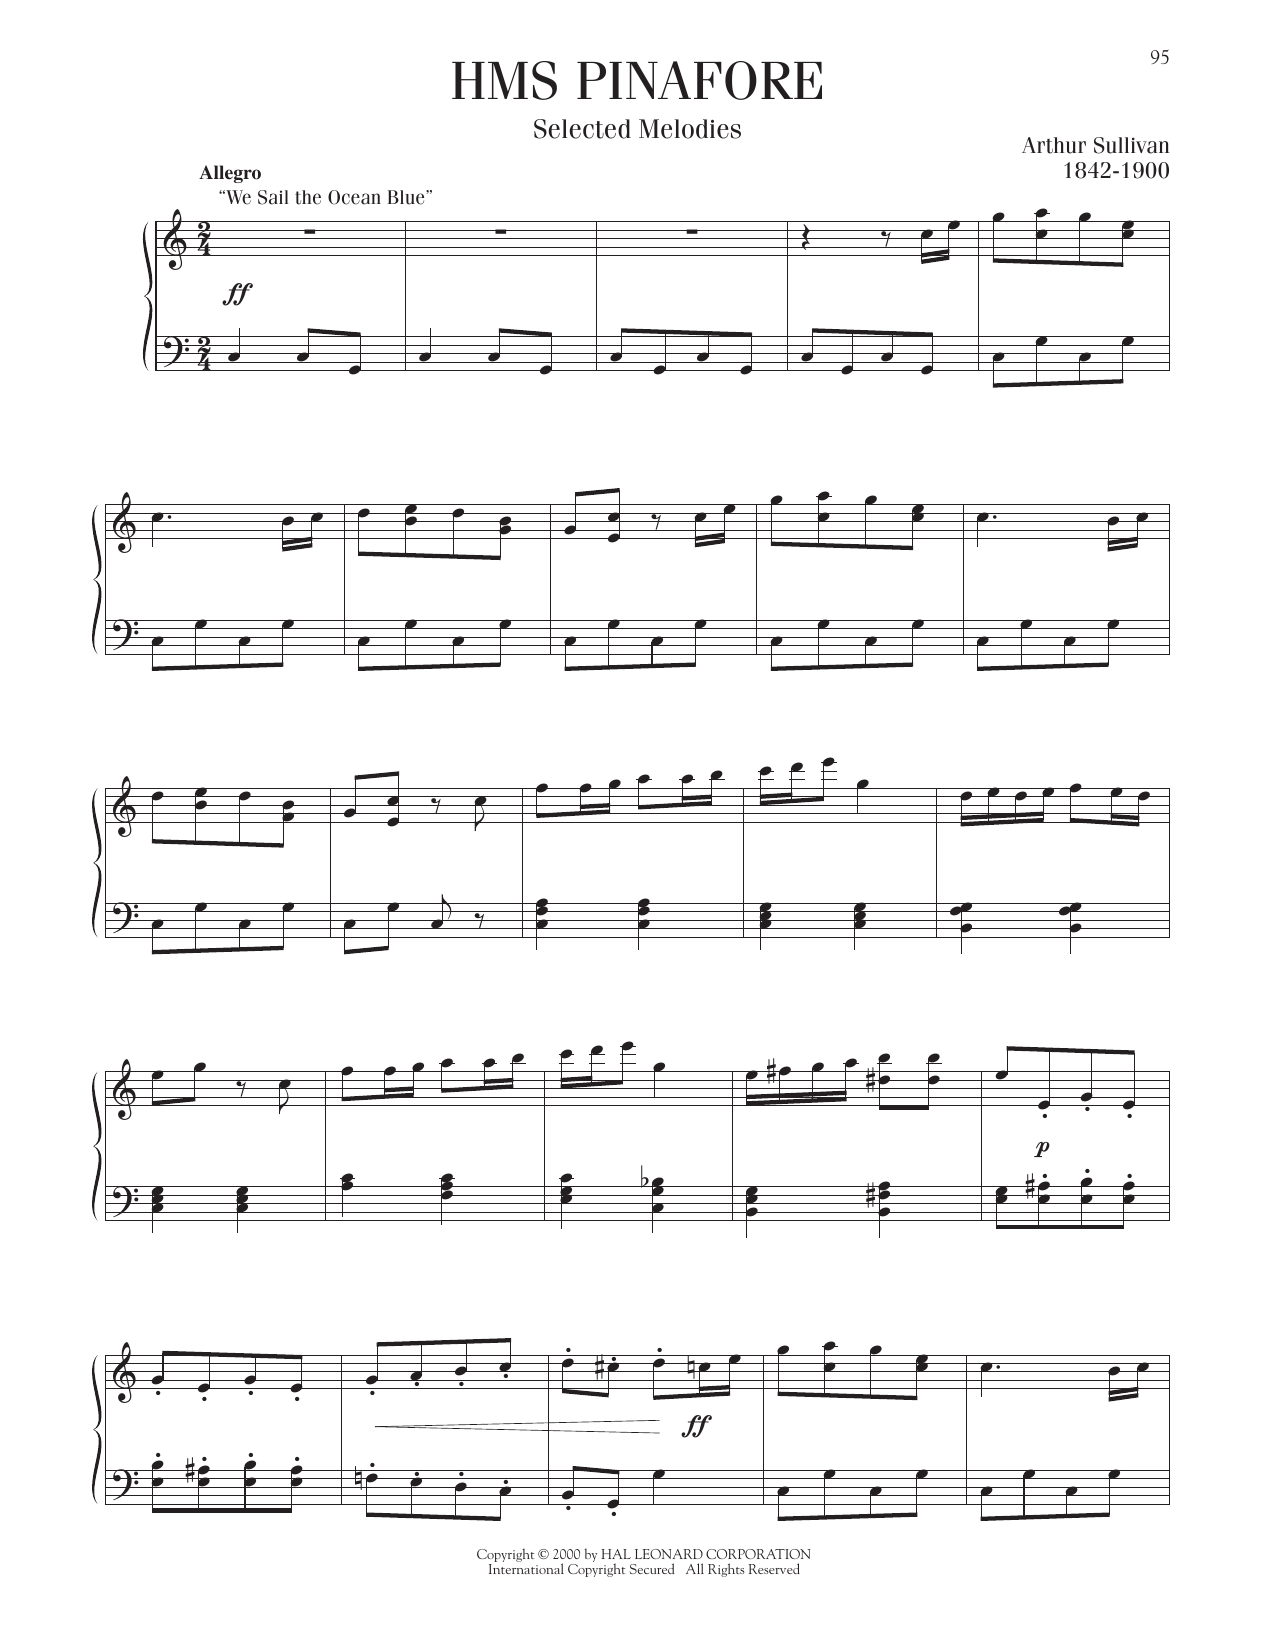 Arthur Sullivan HMS Pinafore, Selected Melodies sheet music notes printable PDF score